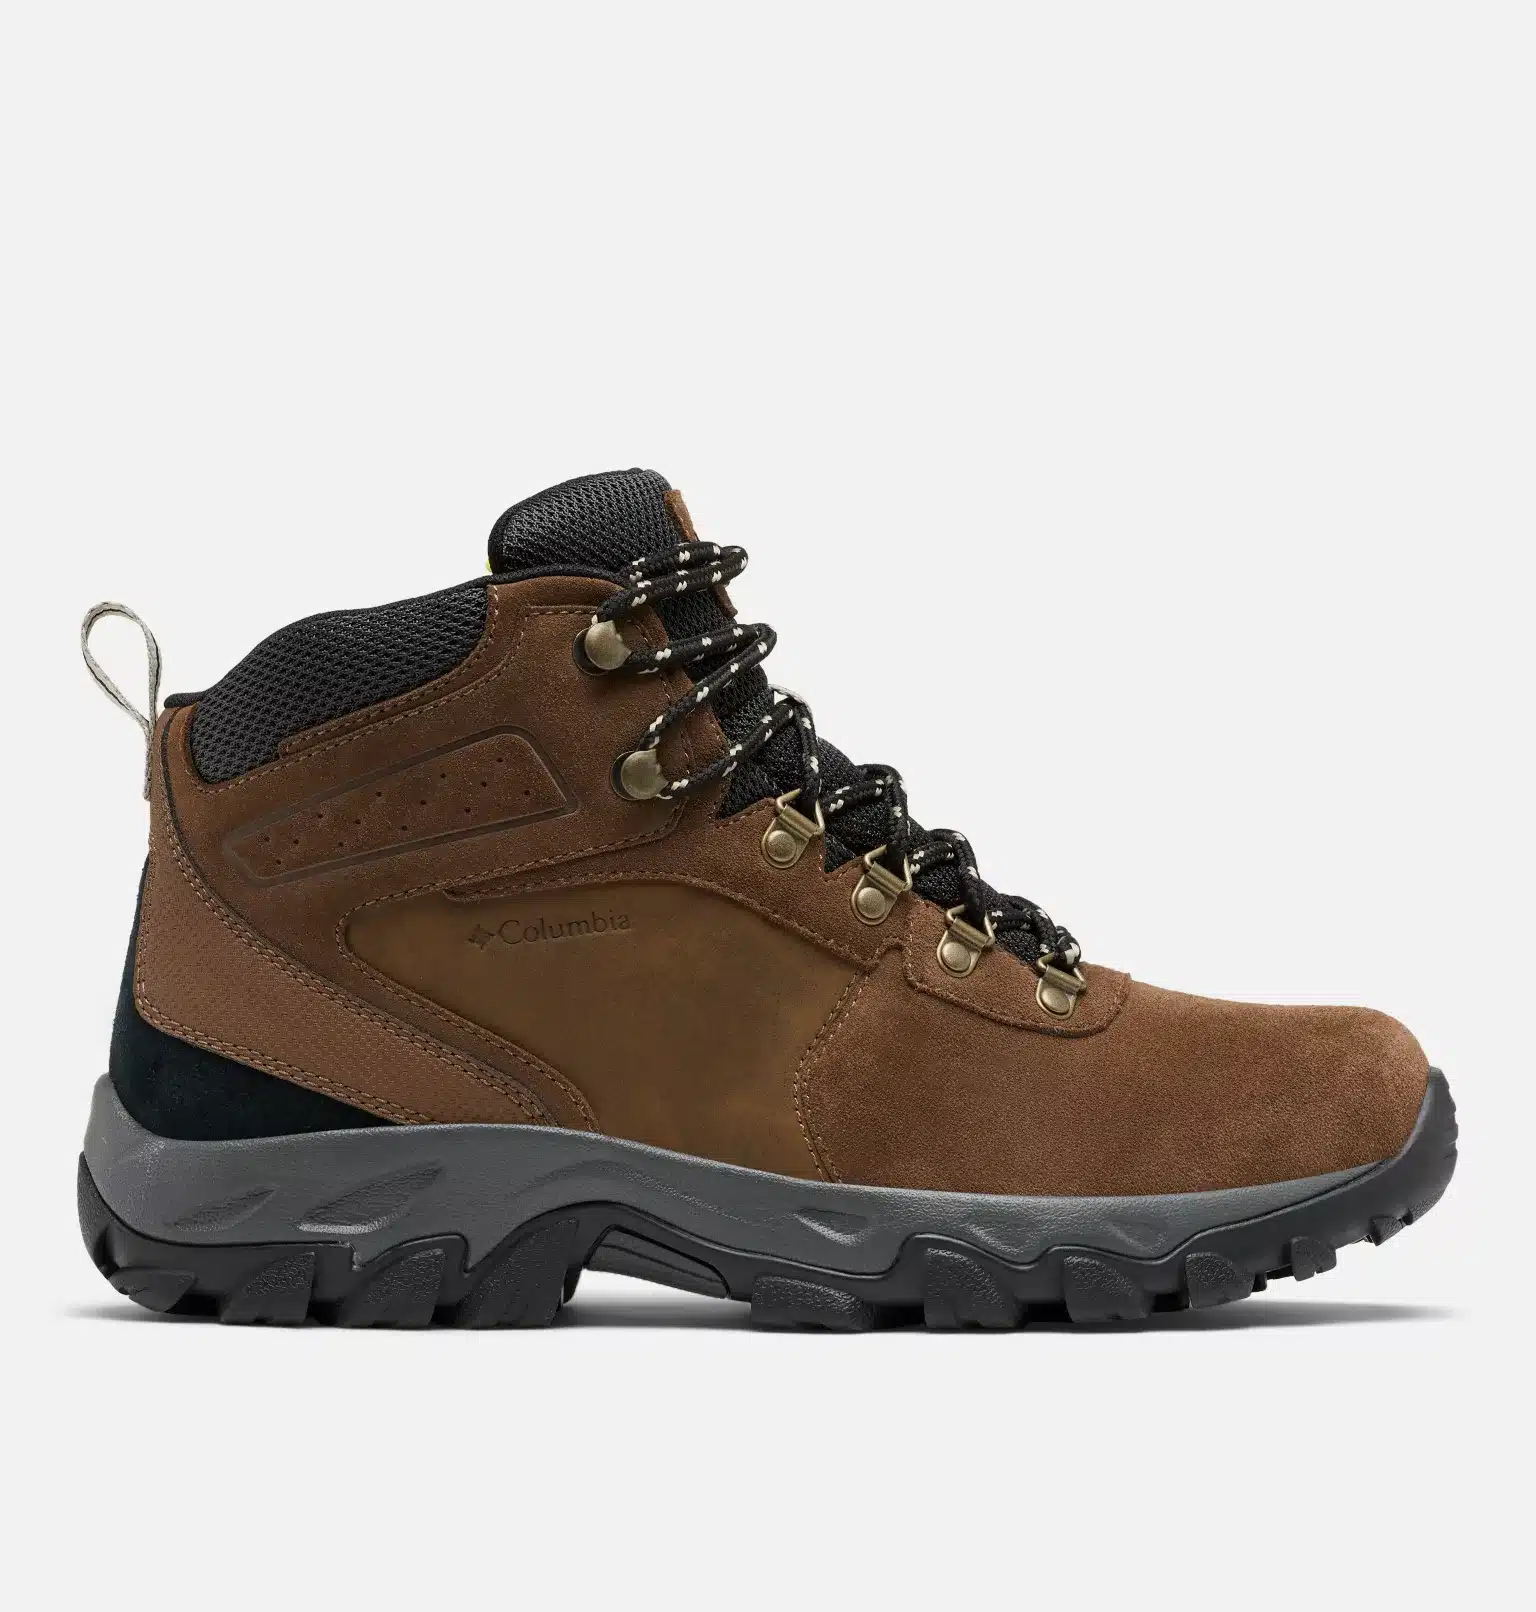 Columbia Men’s Newton Ridge Plus II Suede Waterproof Hiking Boots